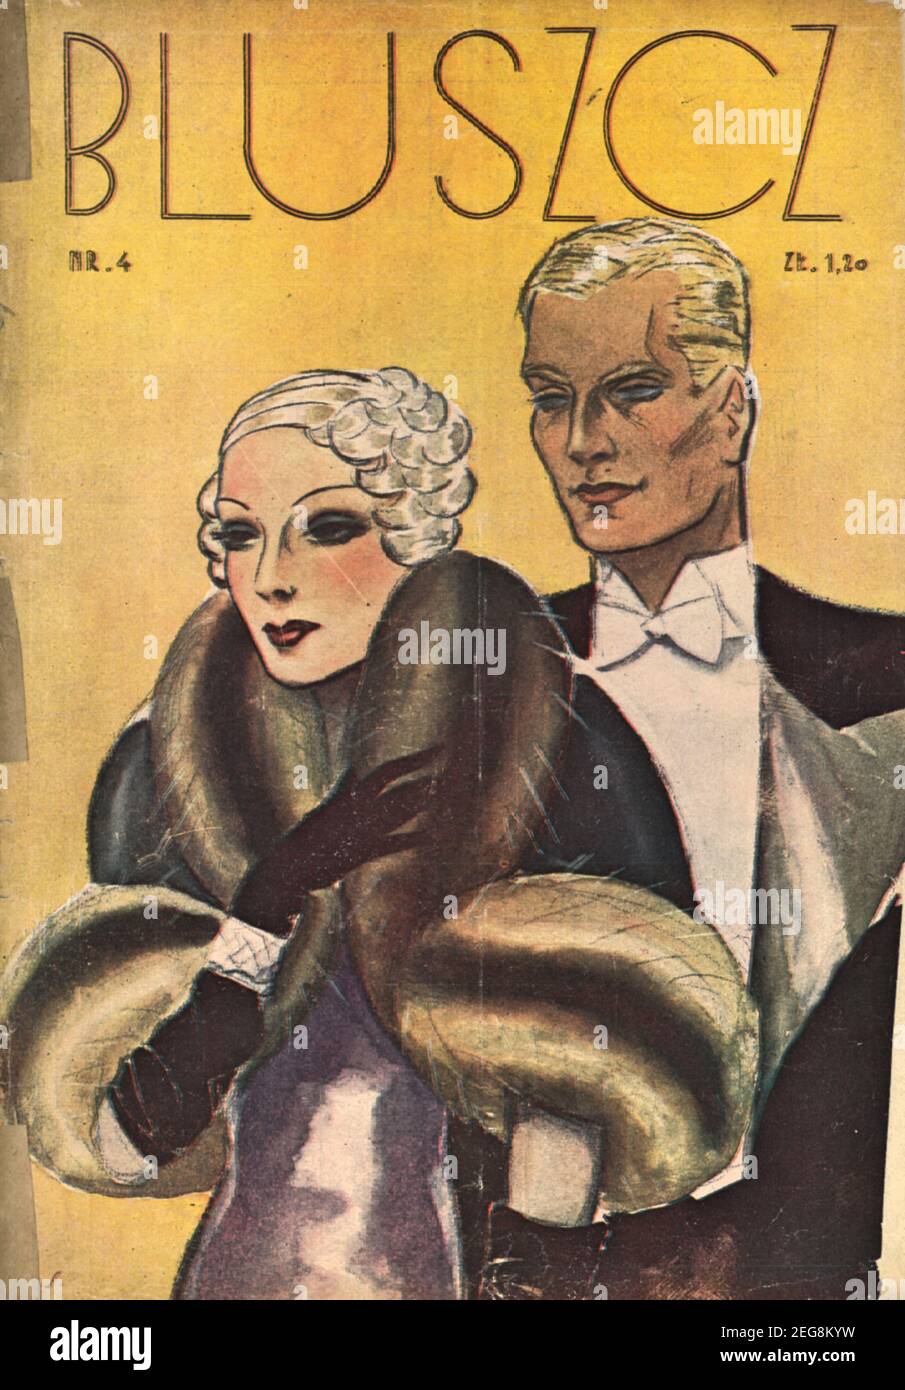 Okładka przedwojennego magazynu dla kobiet Bluszcz 1933, Lata 30te, copertina della rivista polacca di preguerra per donne in stile art deco Bluszcz Foto Stock